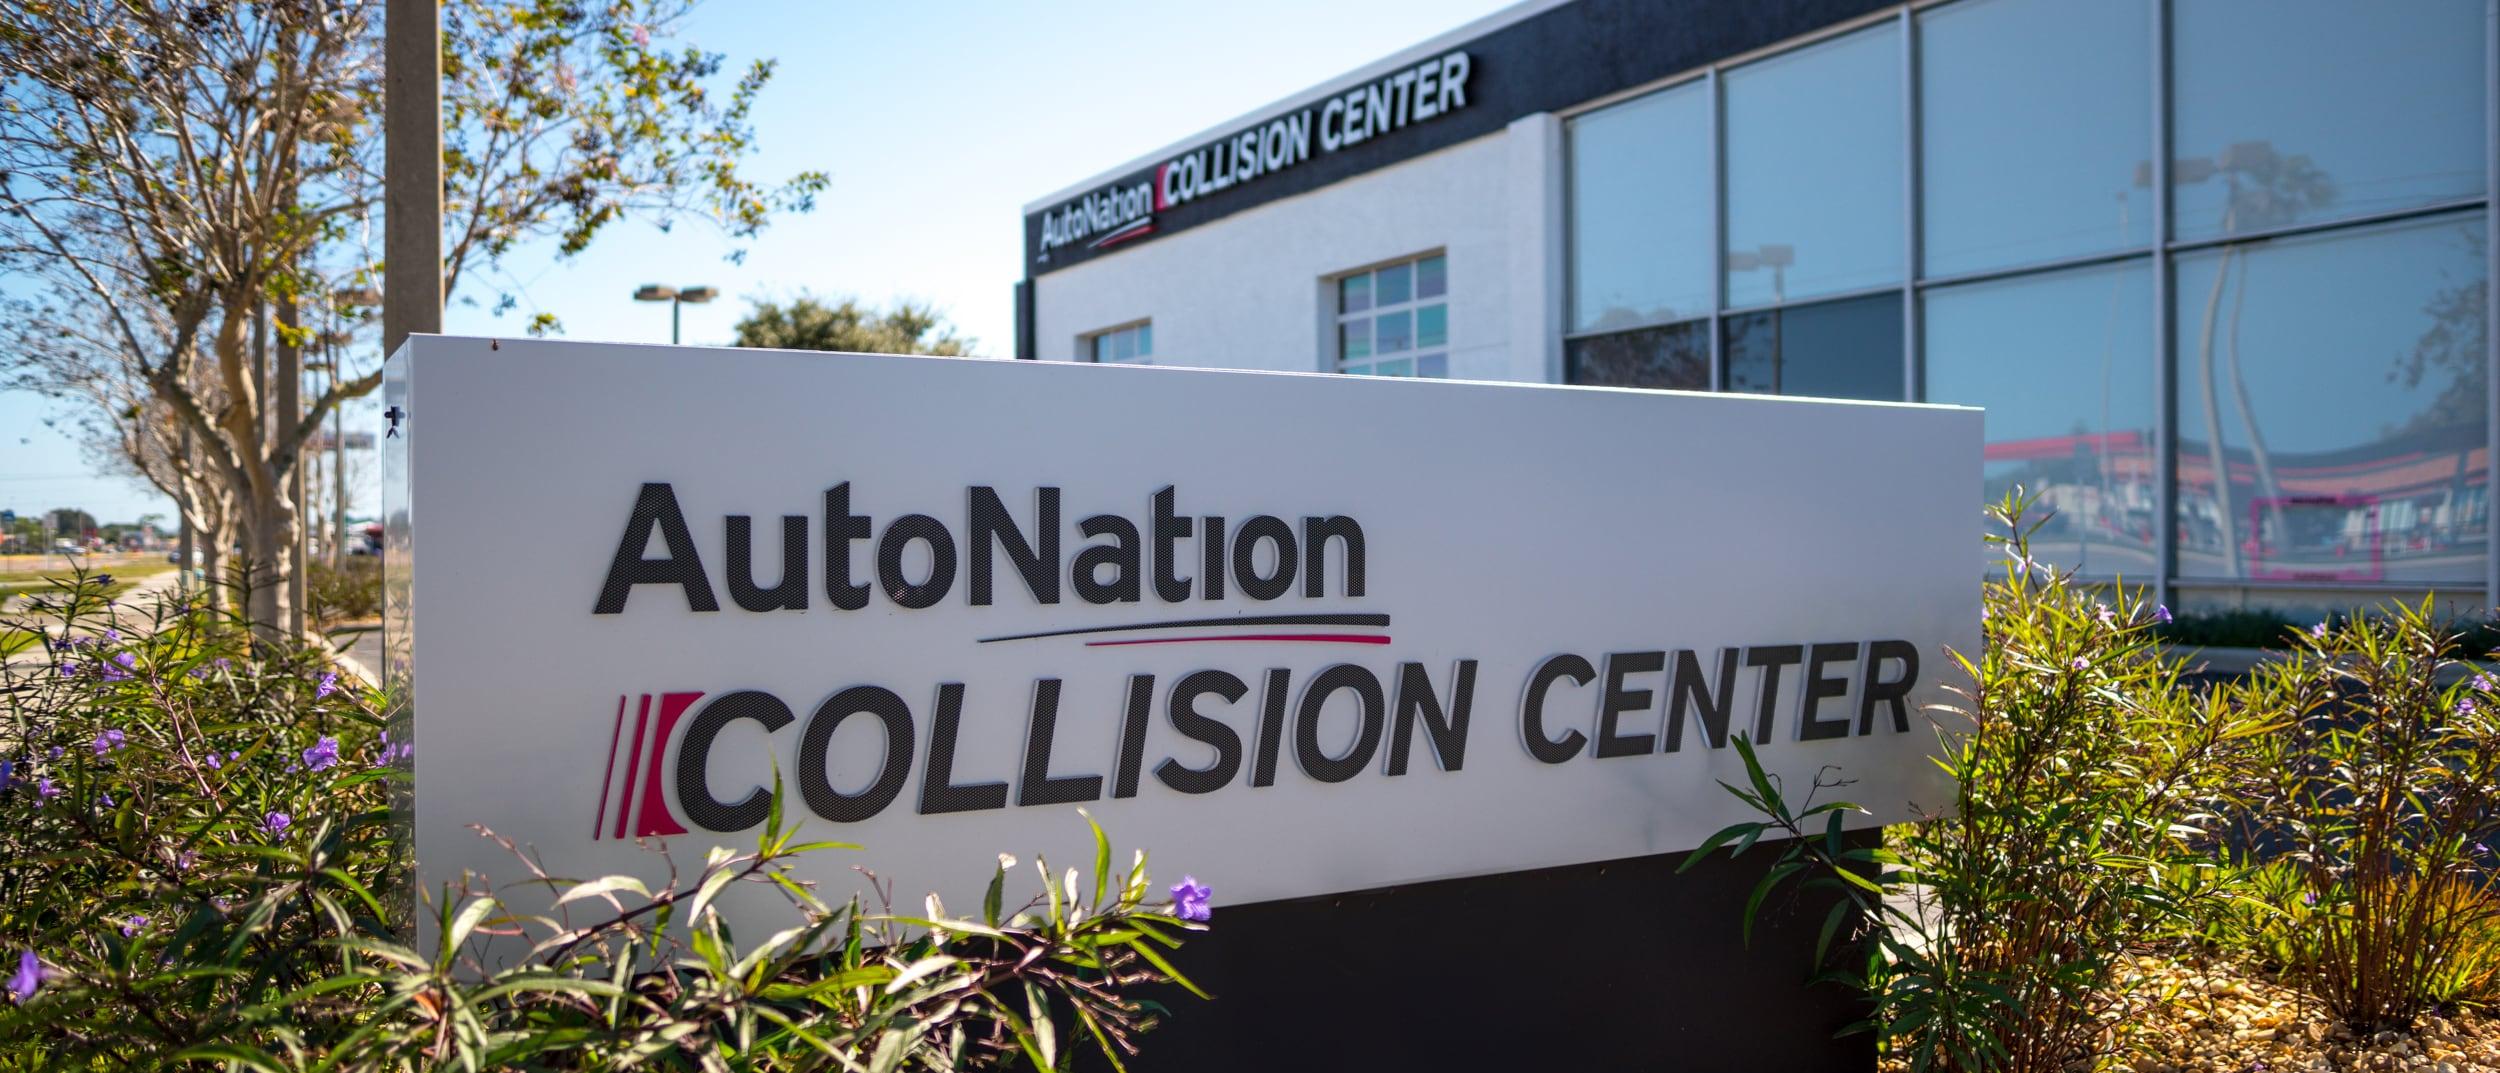 Exterior view of AutoNation Collision Center at AutoNation Chevrolet Timonium